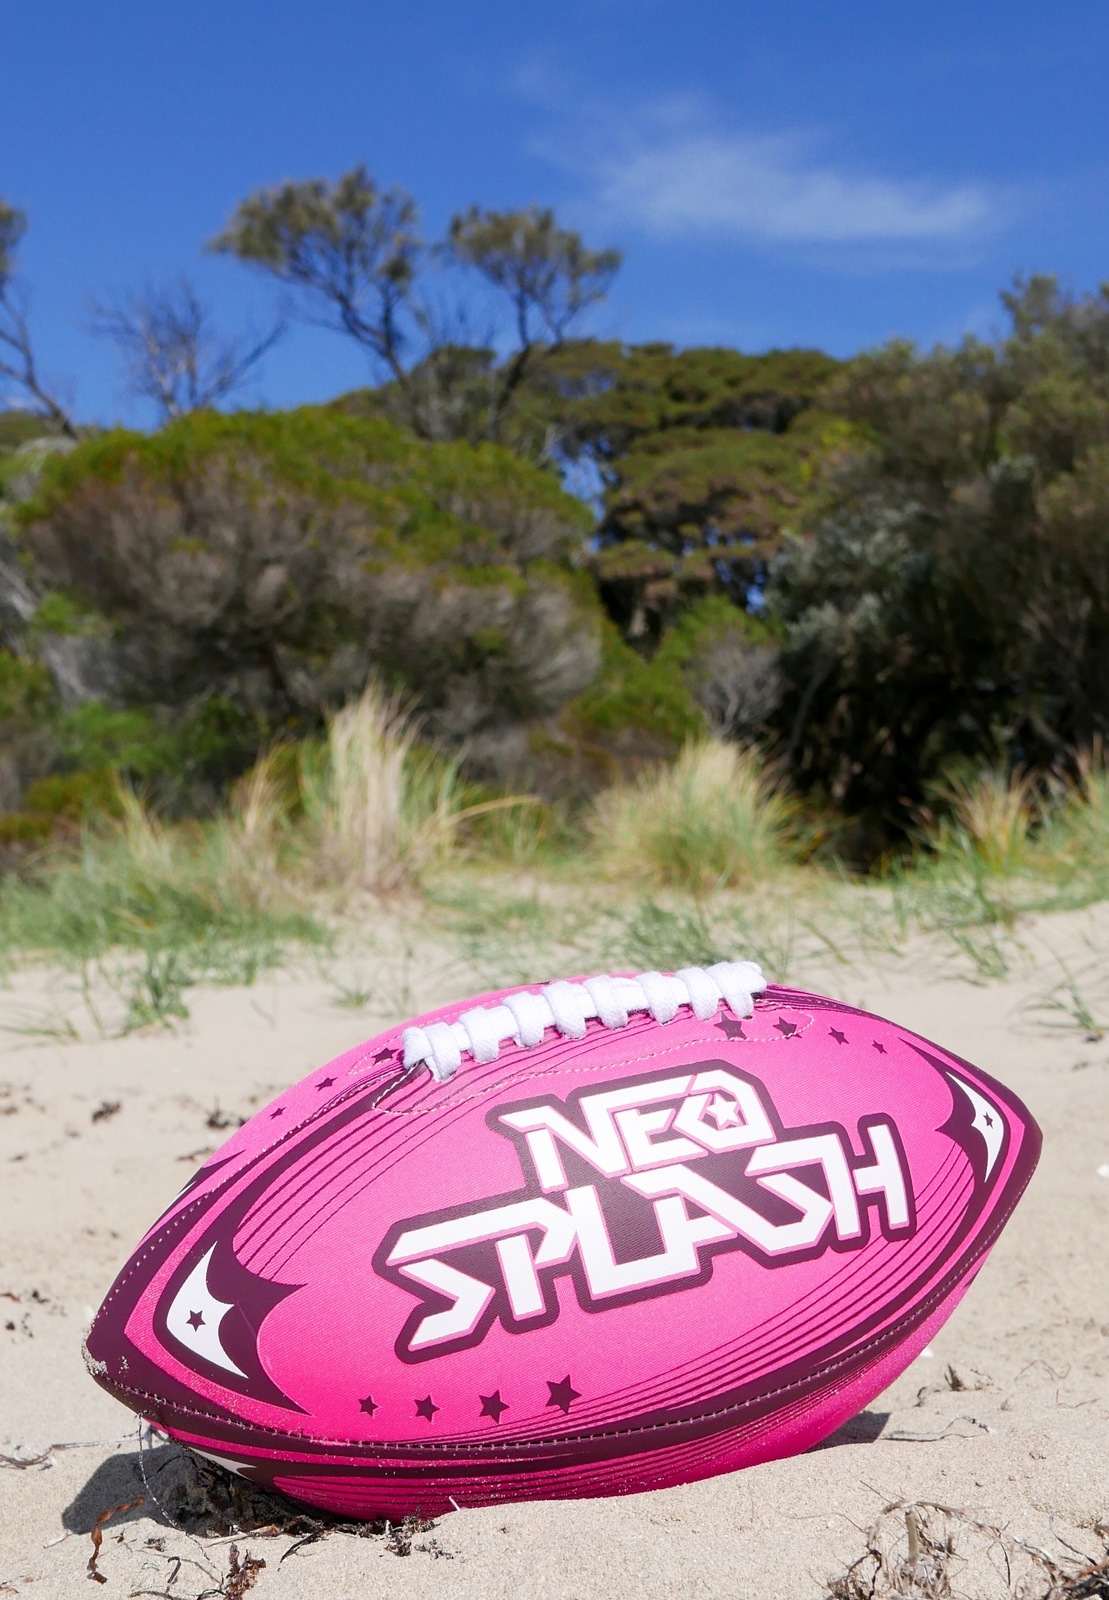 Neo Splash American football stocking filler blue DEFLATED neoprene soft touch ball Rugby shape ball- pocket money